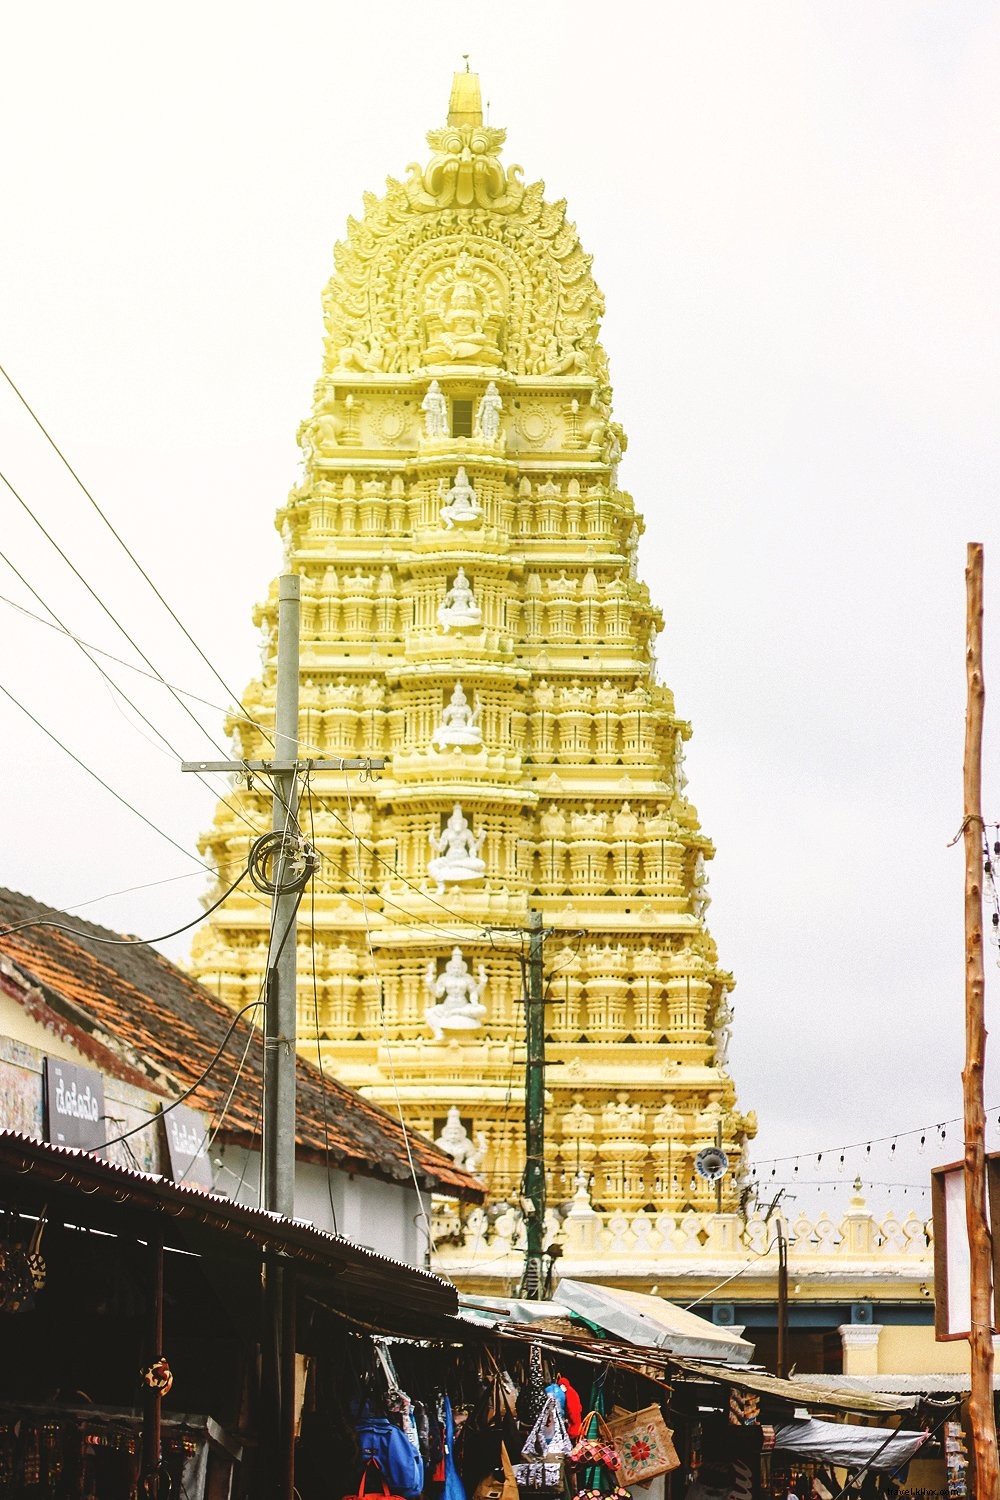 Foto do templo hindu no sul da Índia